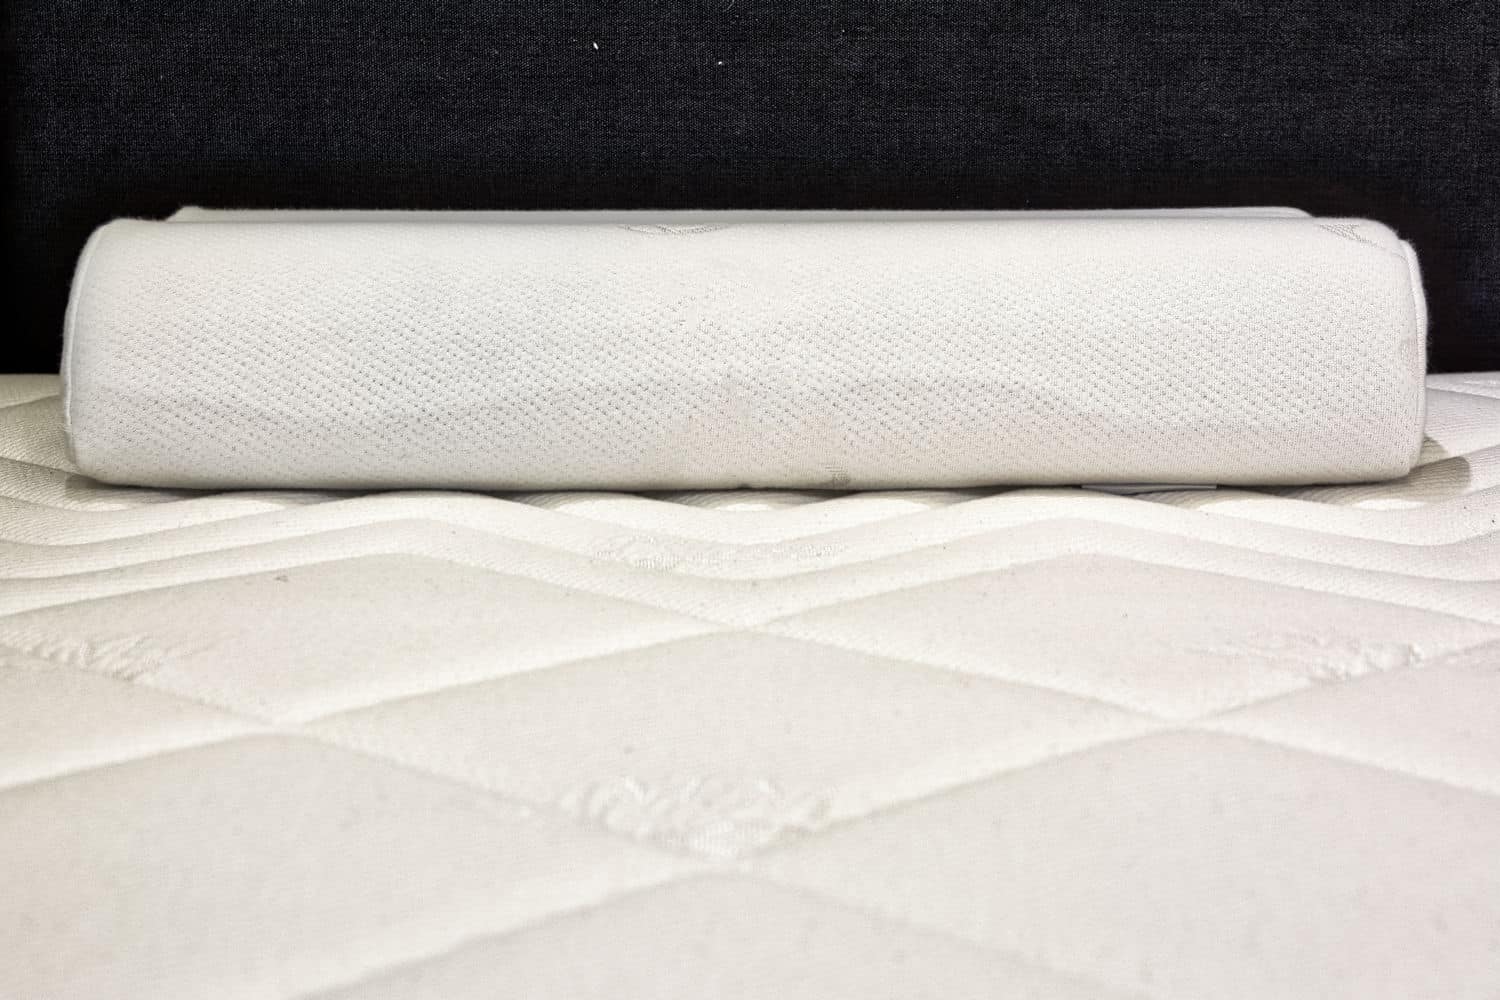 White sleeping pillow sitting on top of white mattress